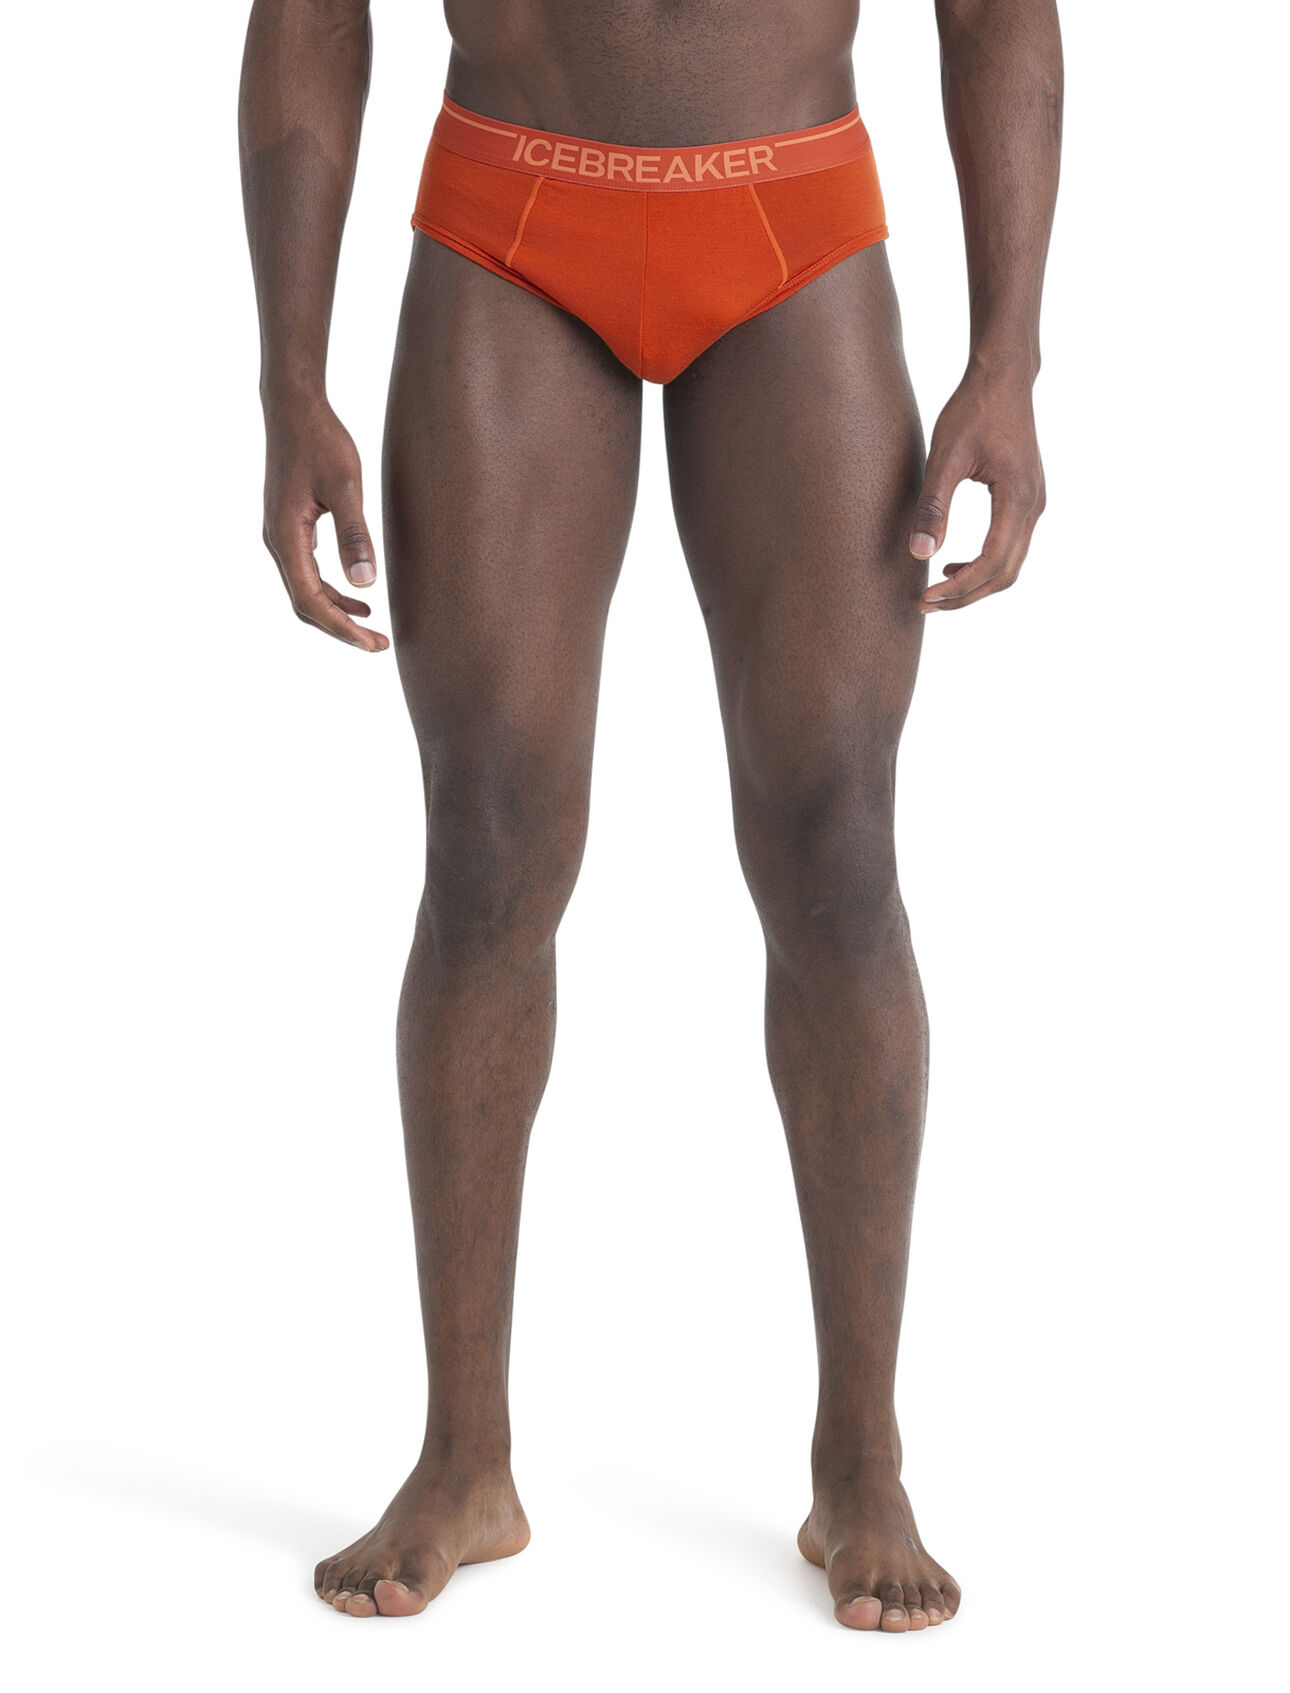 Icebreaker Merino Anatomica Brief-Mens Underwear, Molten, Large at   Men's Clothing store